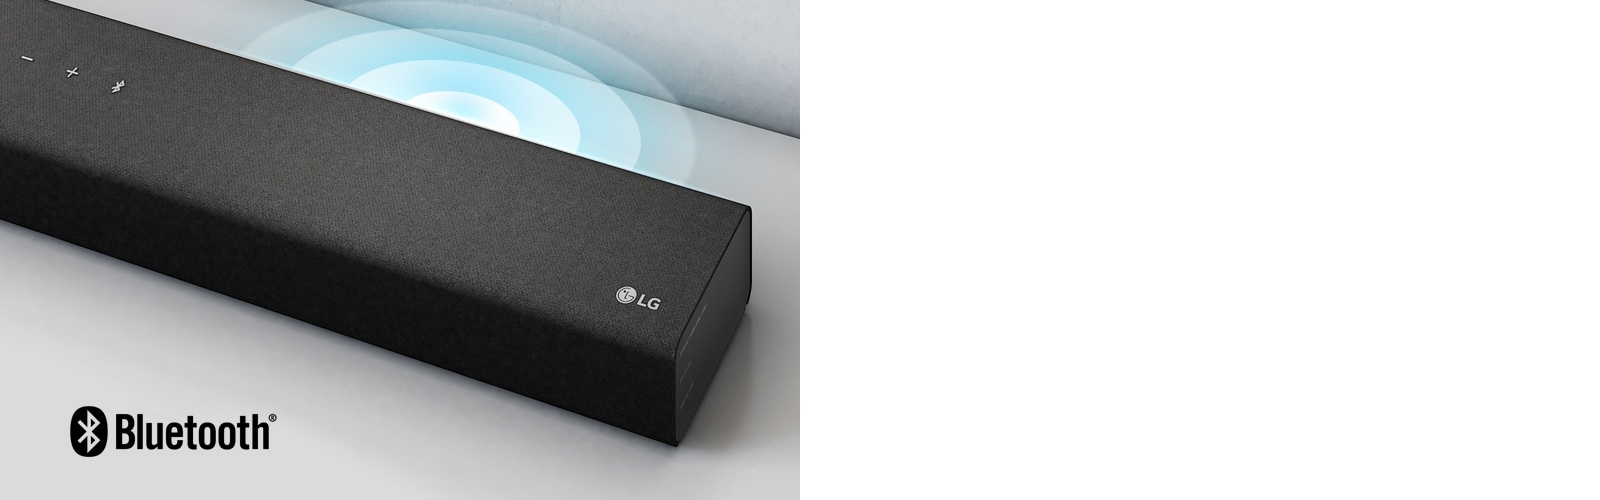 LG Soundbar DS60Q | LG Österreich